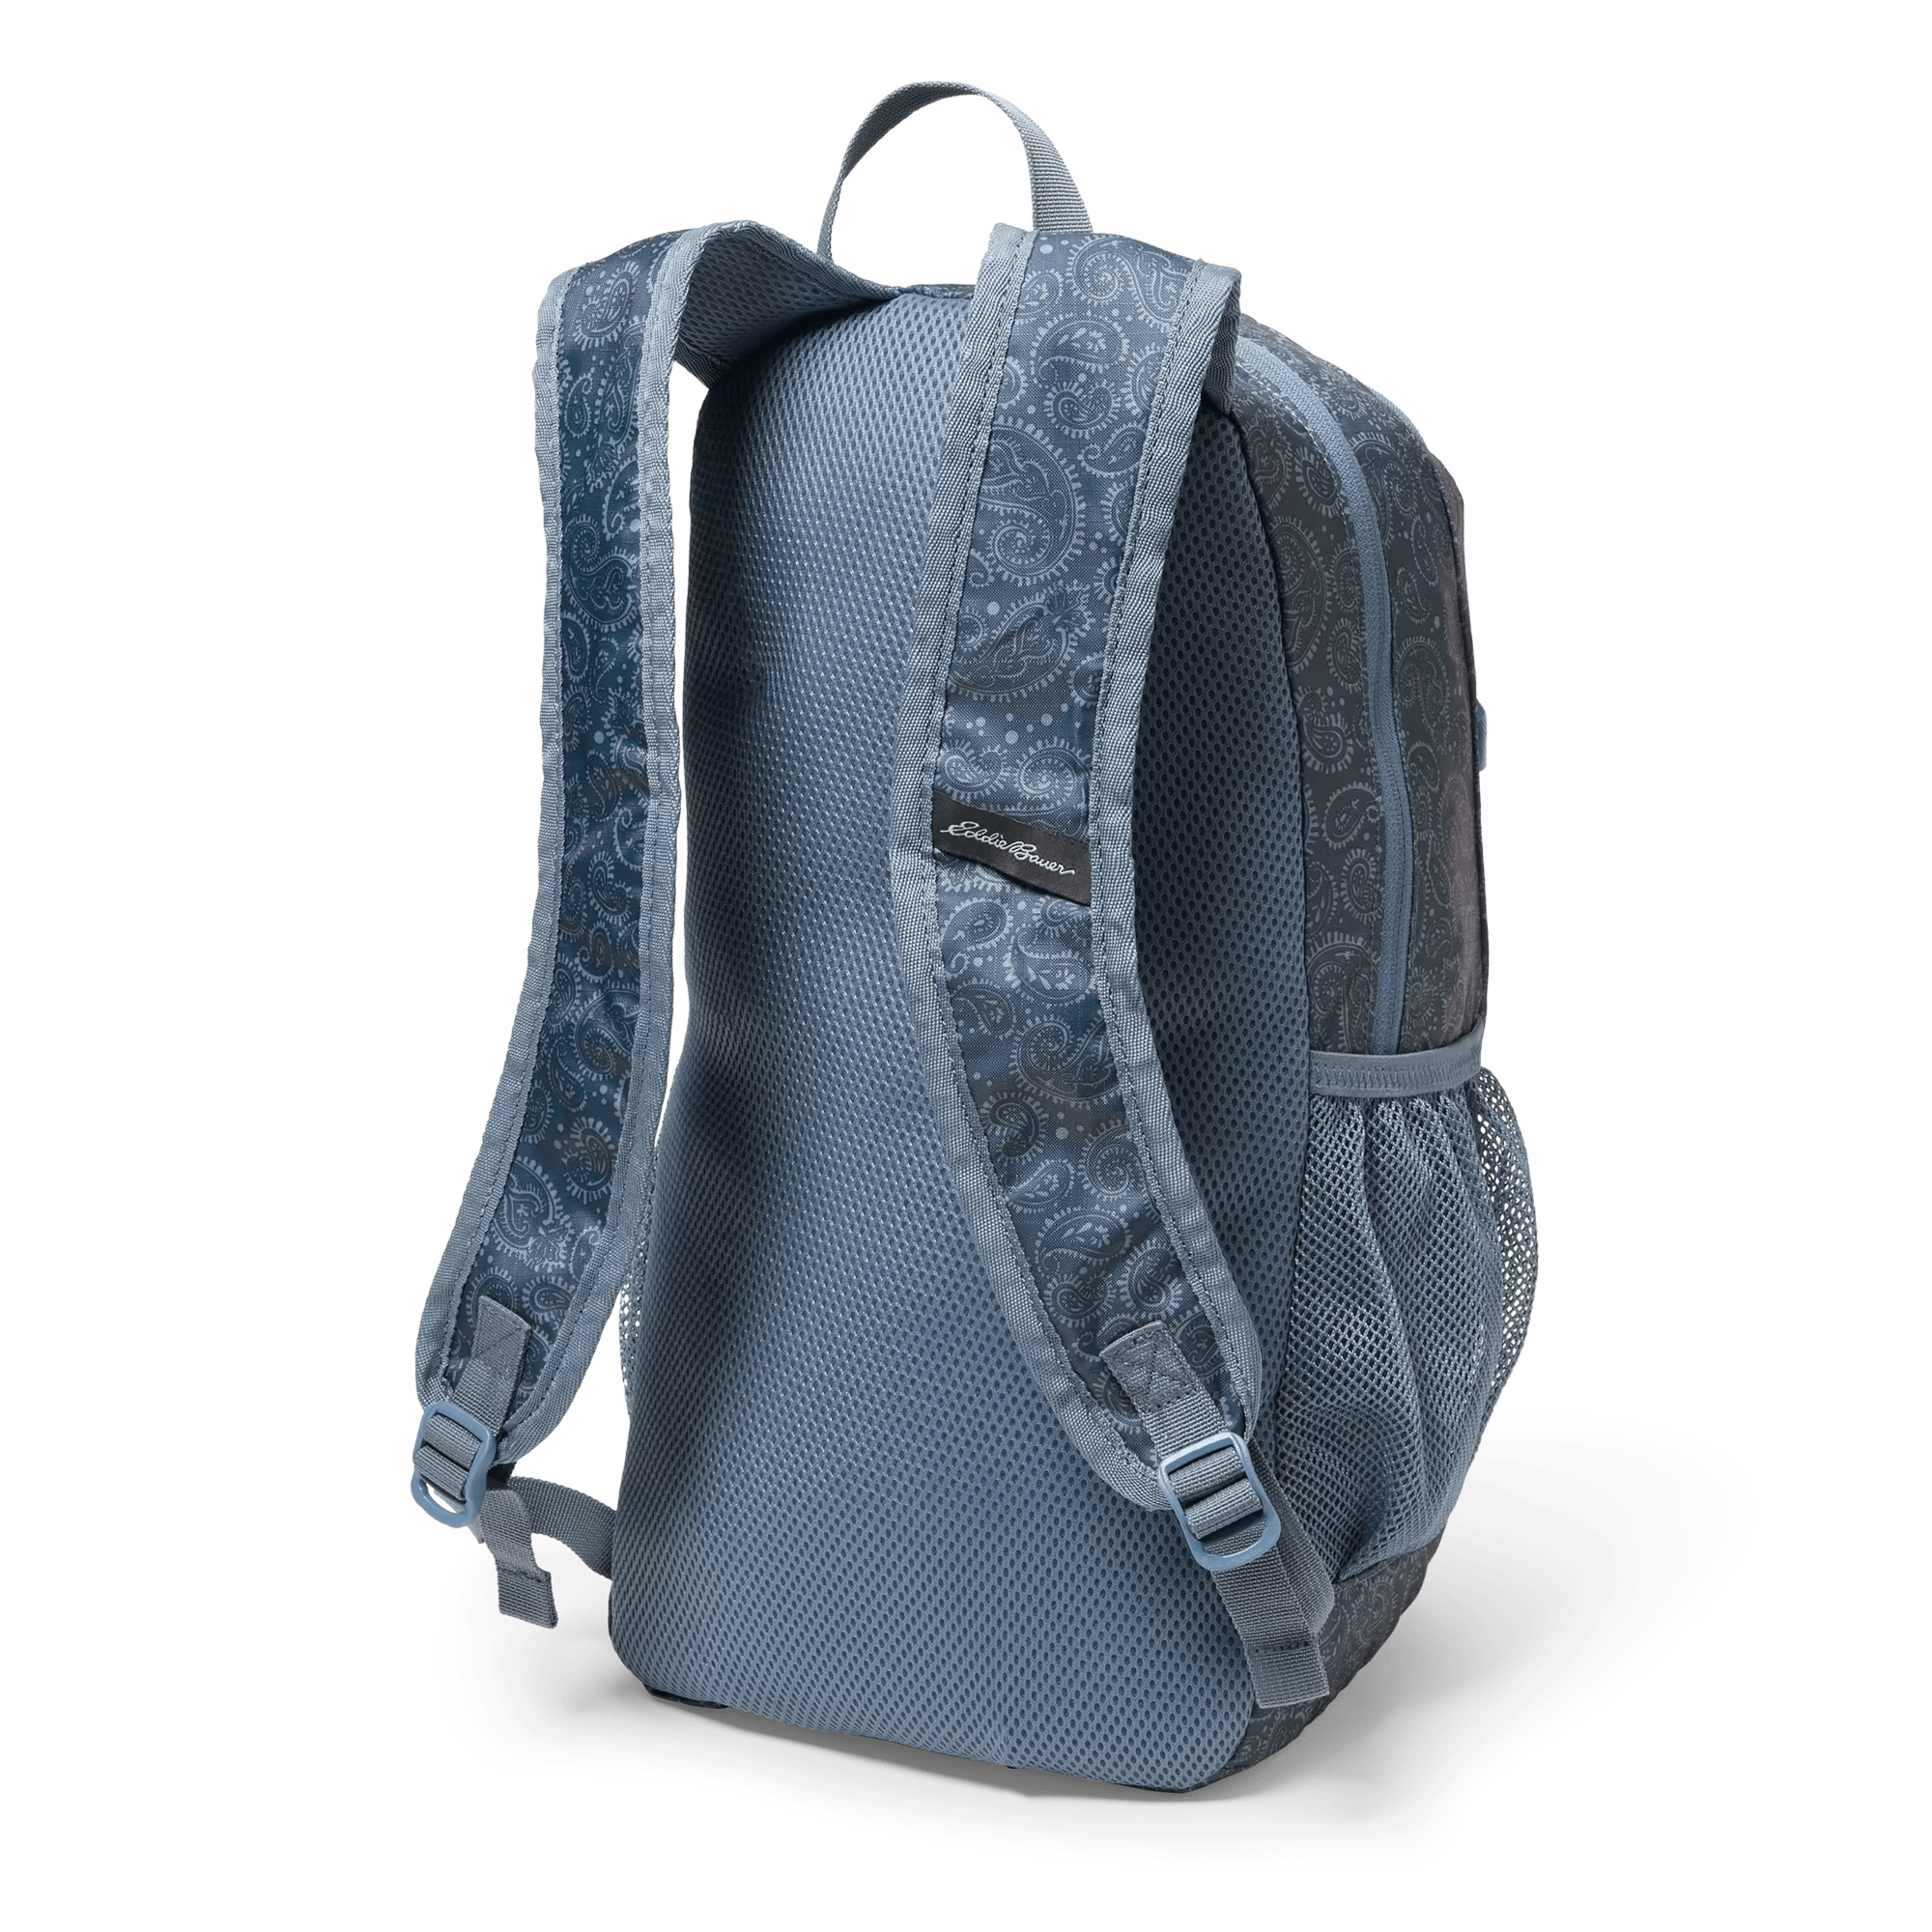 Stowaway Packable 20L Daypack Backpack - Plus